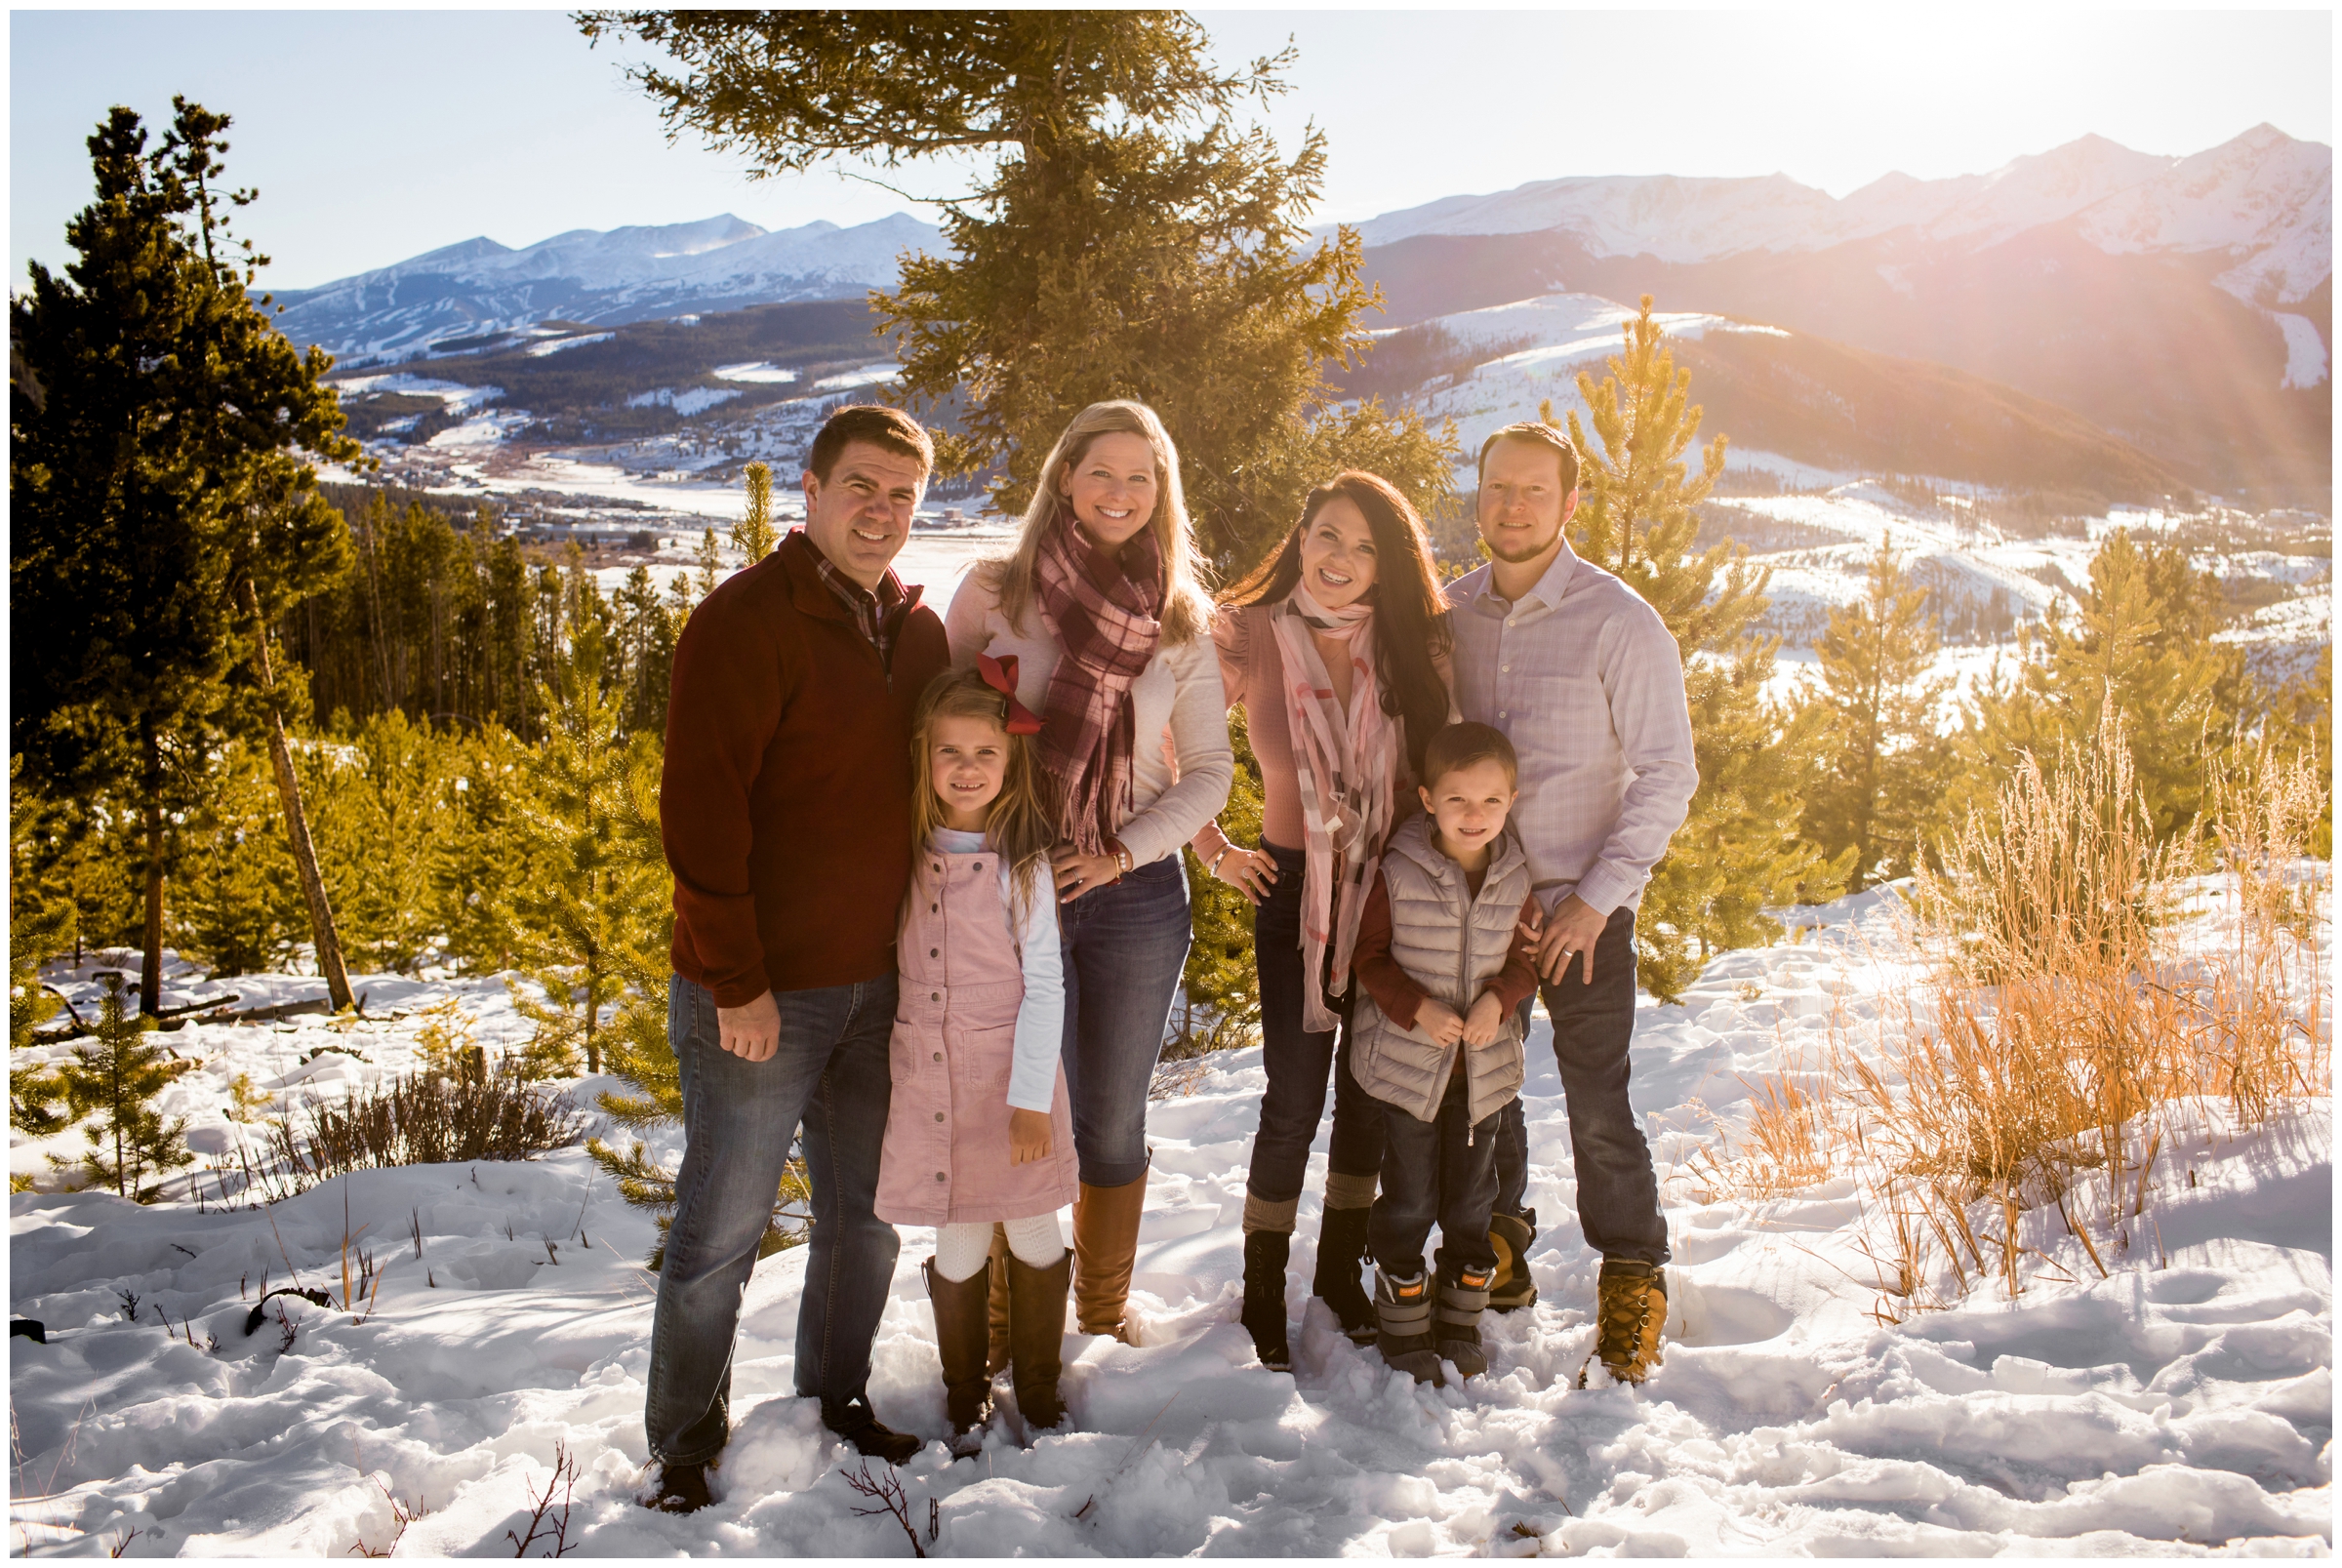 Breckenridge winter family photos at Sapphire Point by Colorado mountain photographer Plum Pretty Photography